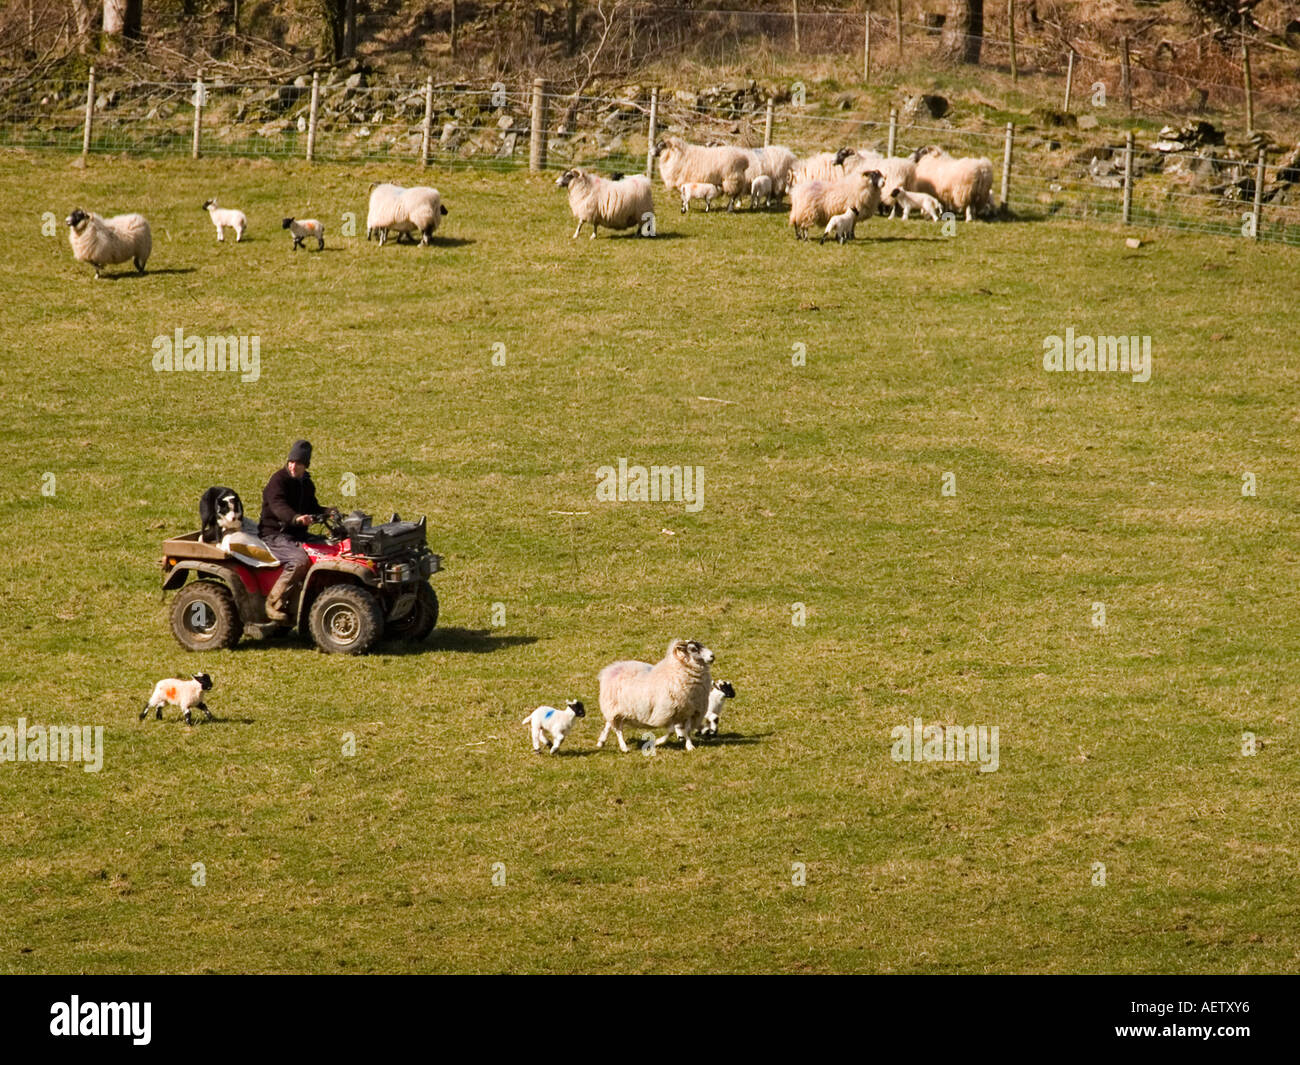 Shepherd on quad bike rounding up ewes and lambs on farm. Stock Photo